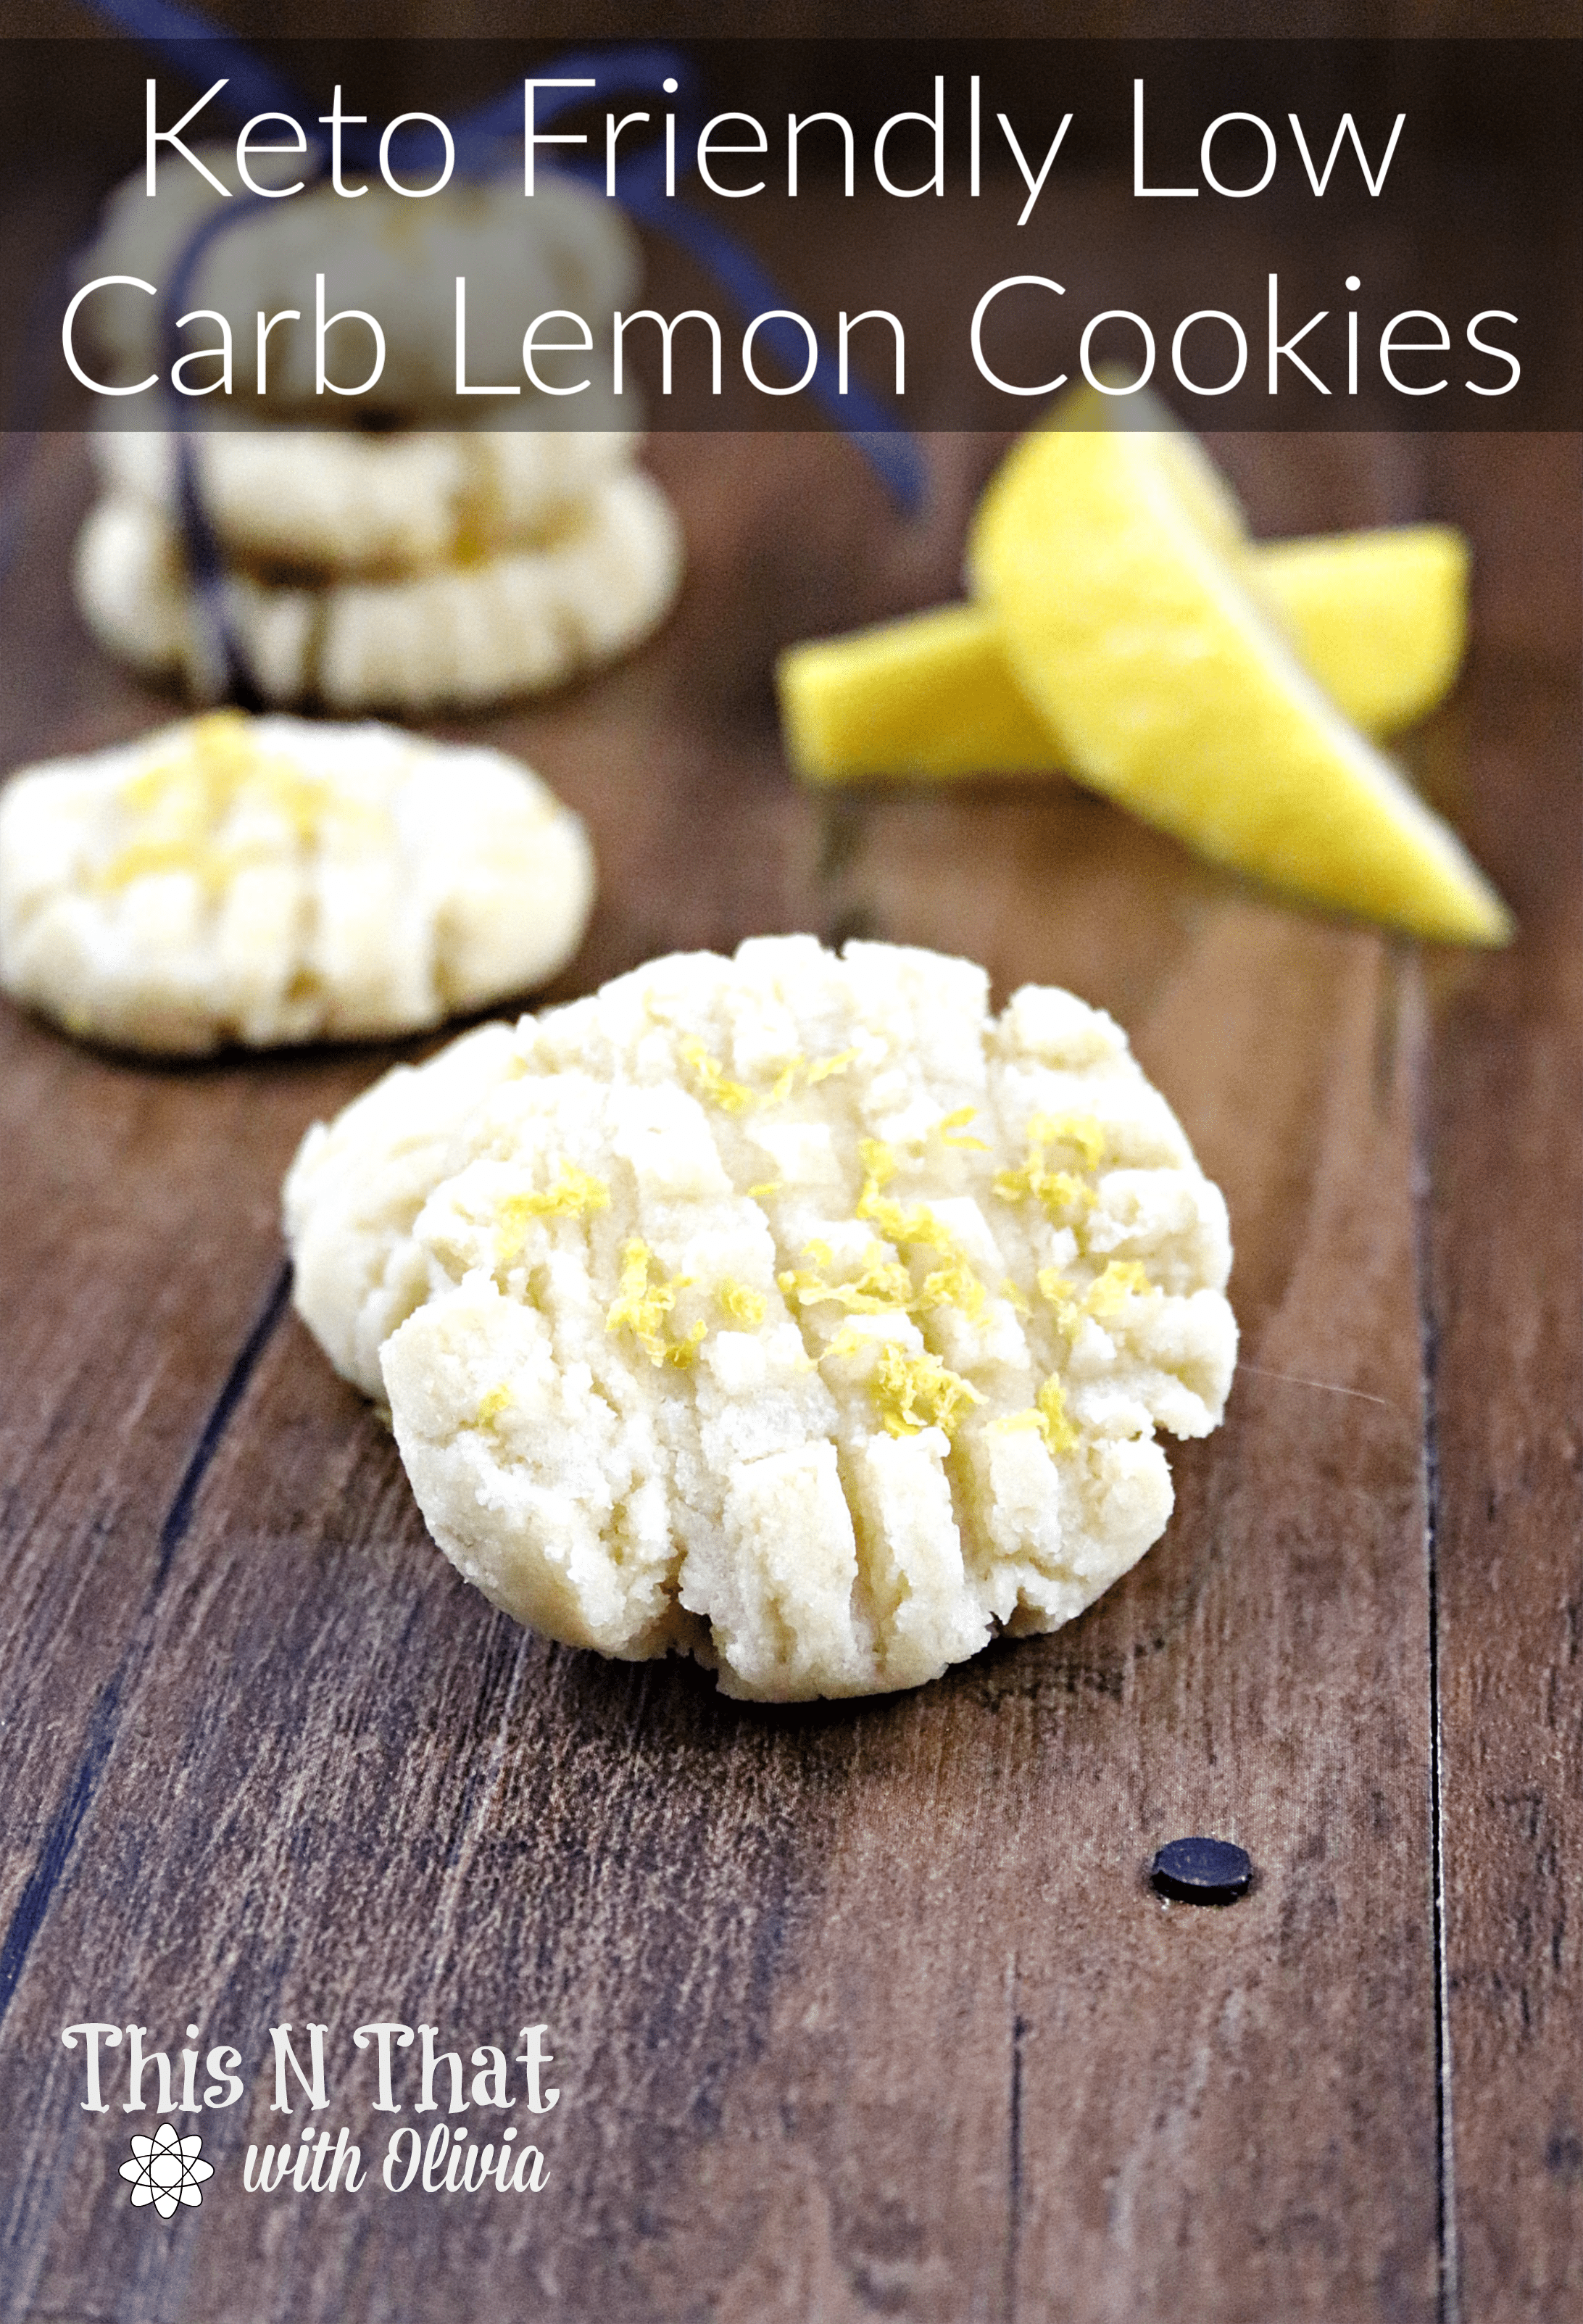 Keto Friendly Low Carb Lemon Cookies Recipe!